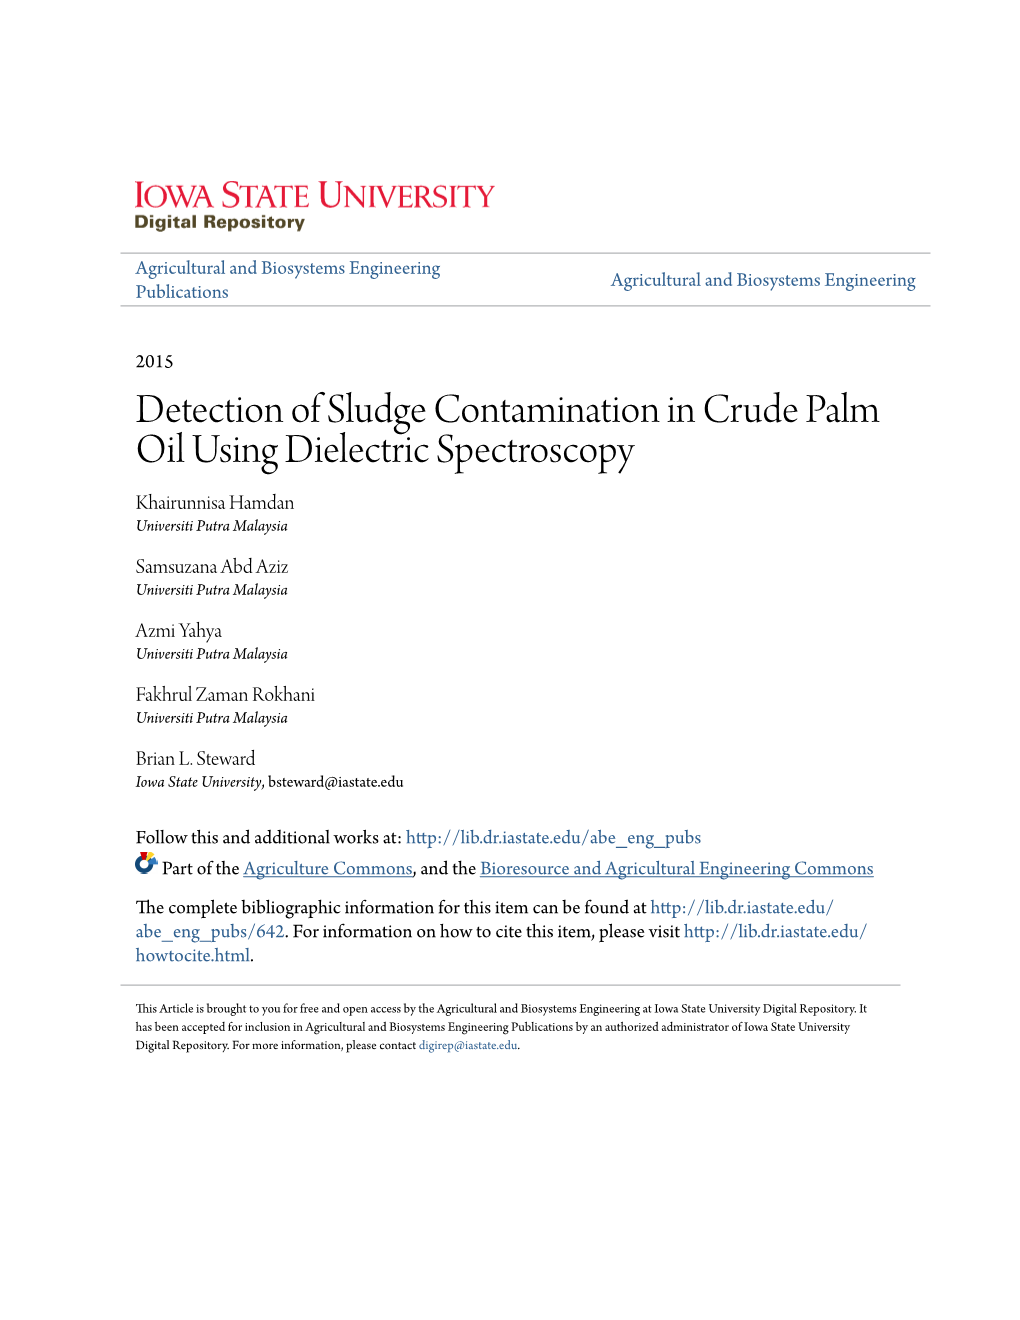 Detection of Sludge Contamination in Crude Palm Oil Using Dielectric Spectroscopy Khairunnisa Hamdan Universiti Putra Malaysia